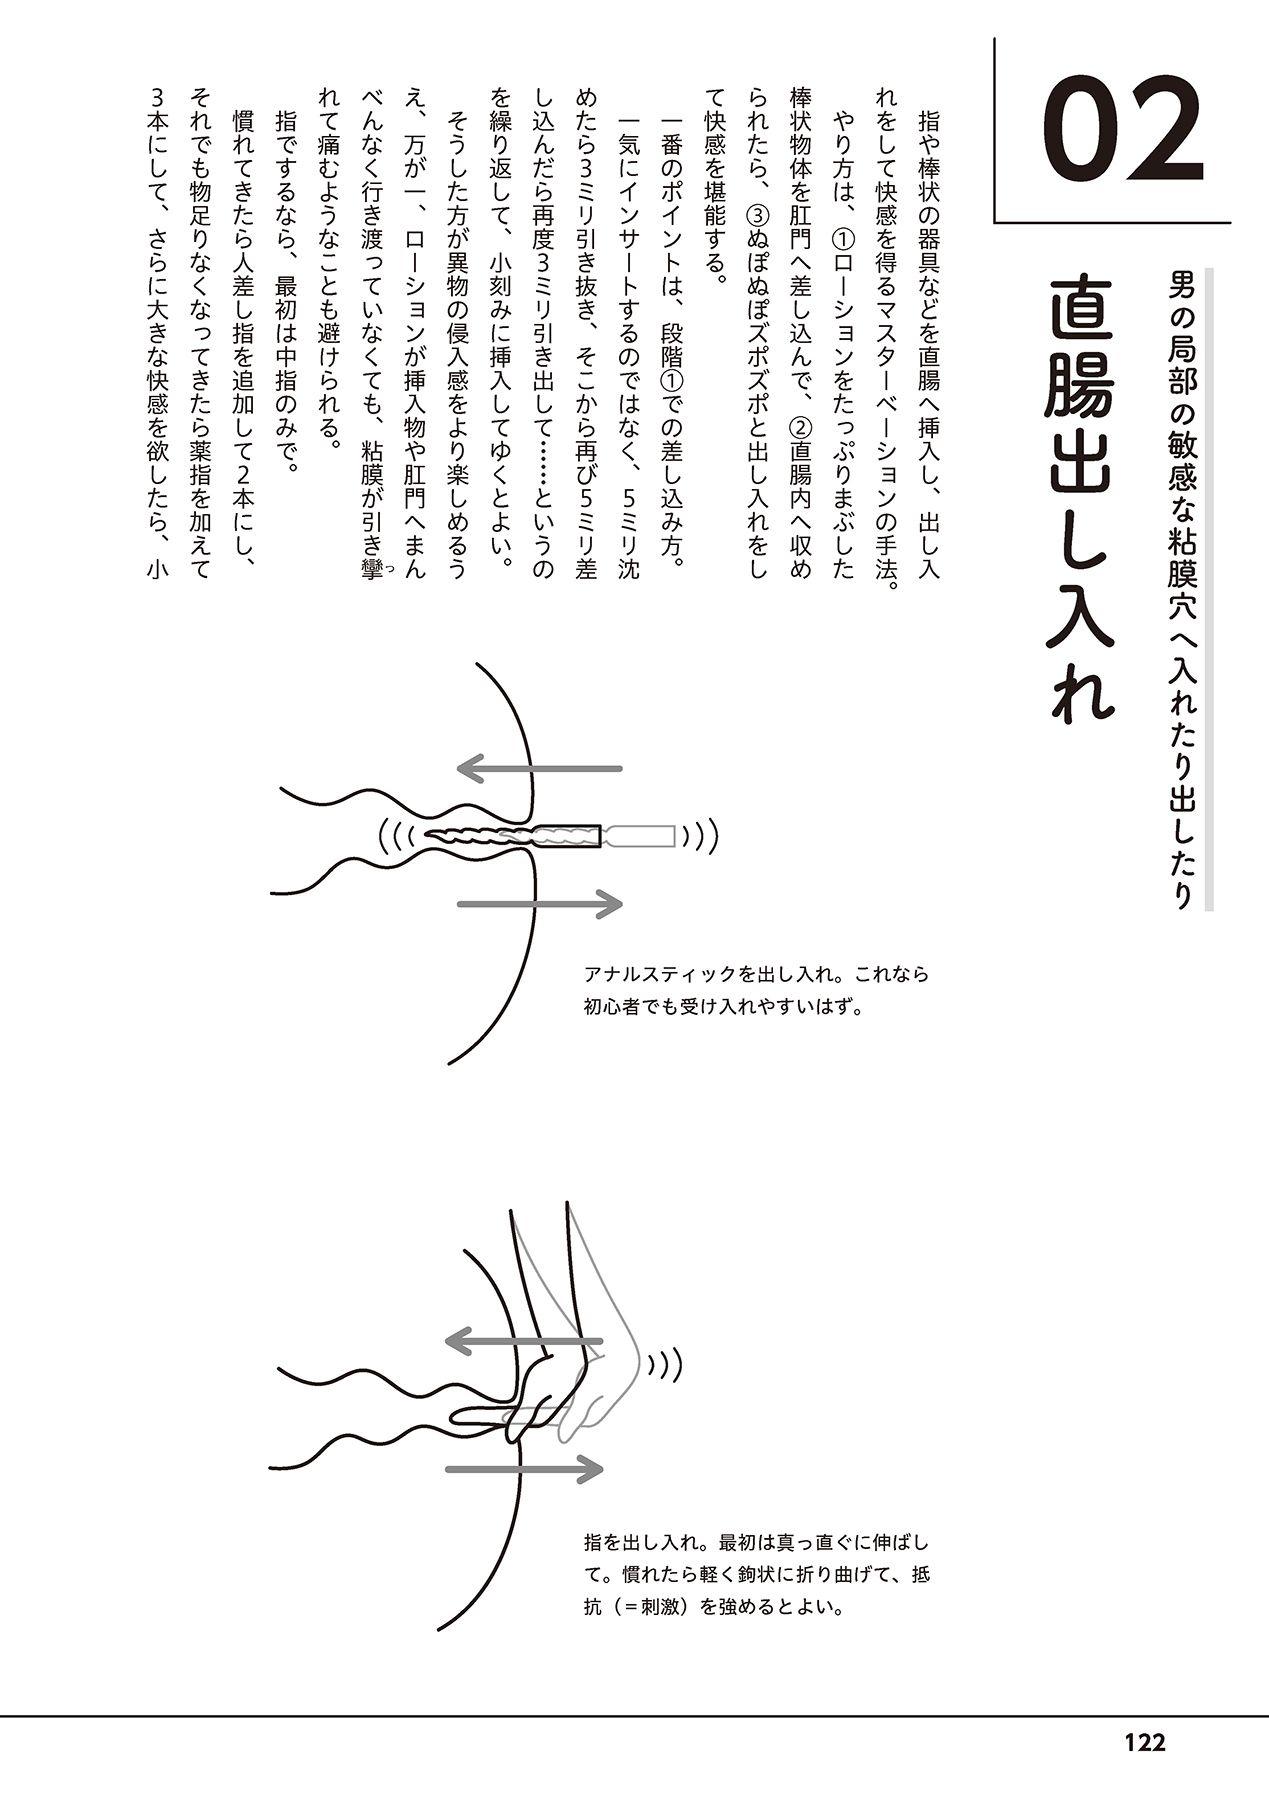 Otoko no Jii Onanie Kanzen Manual Illustration Han...... Onanie Play 123